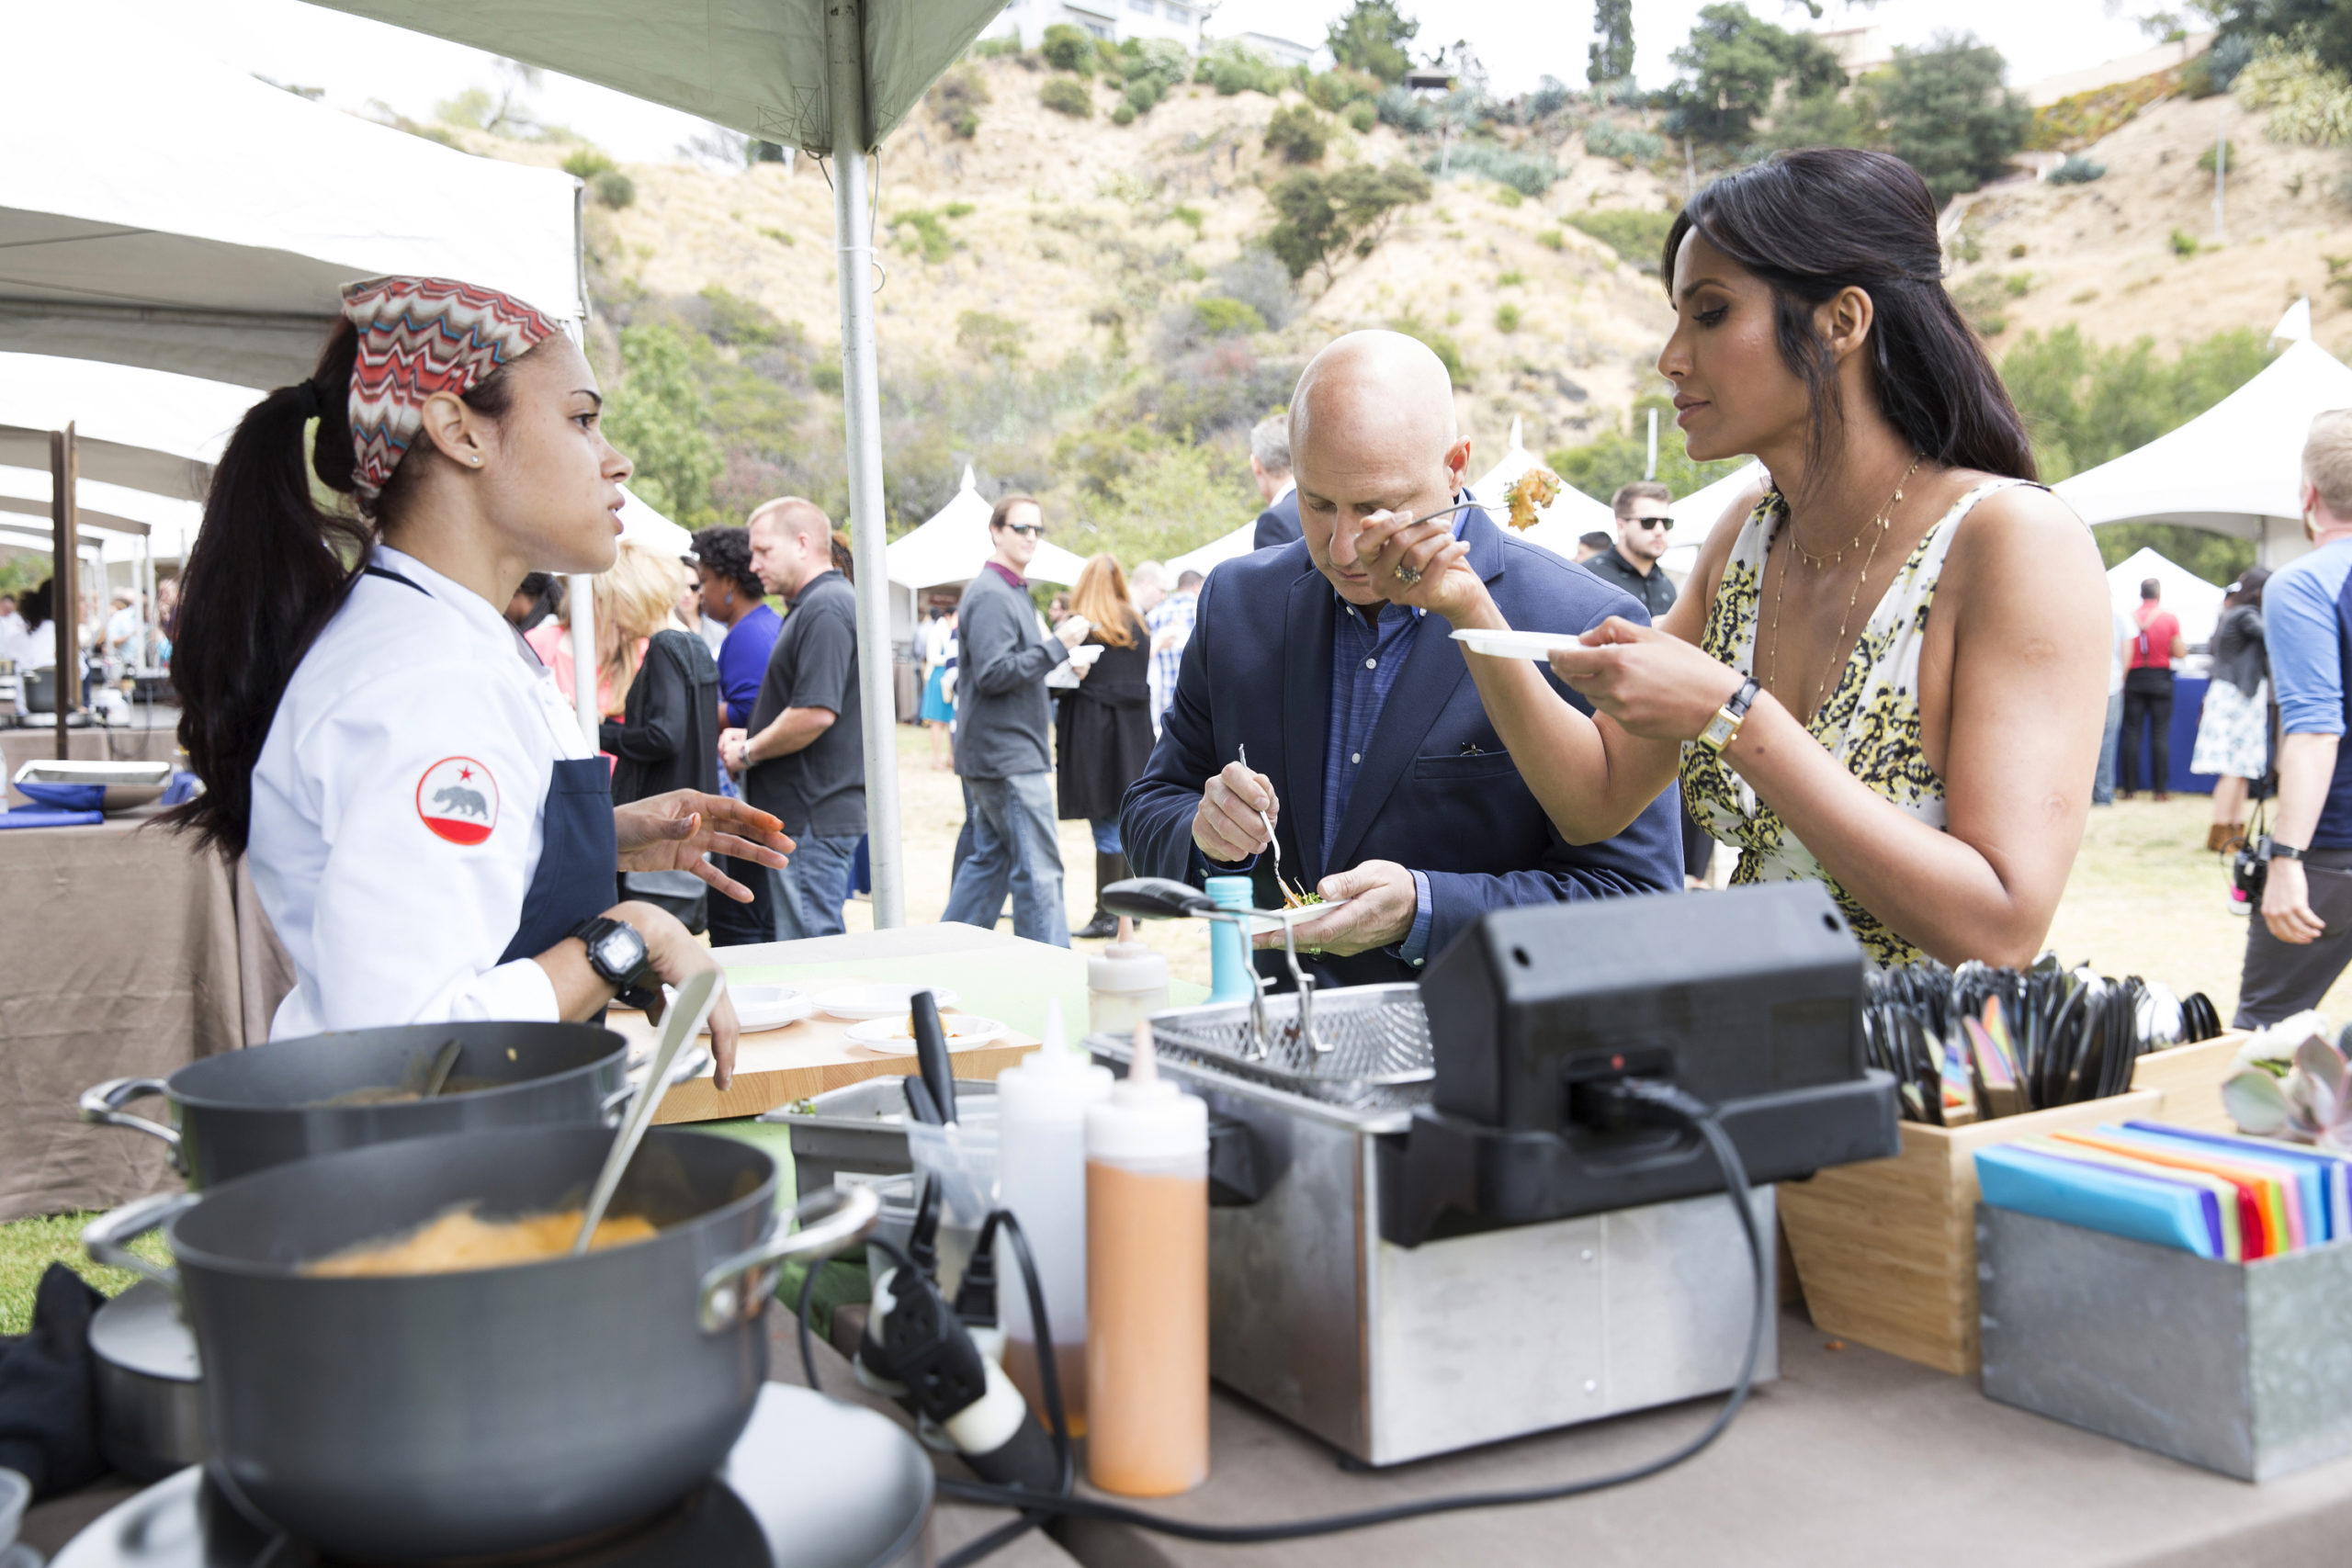 Top Chef - Angelina Bastidas, Tom Colicchio, Padma Lakshmi - 'Stop the Presses' - Season 13